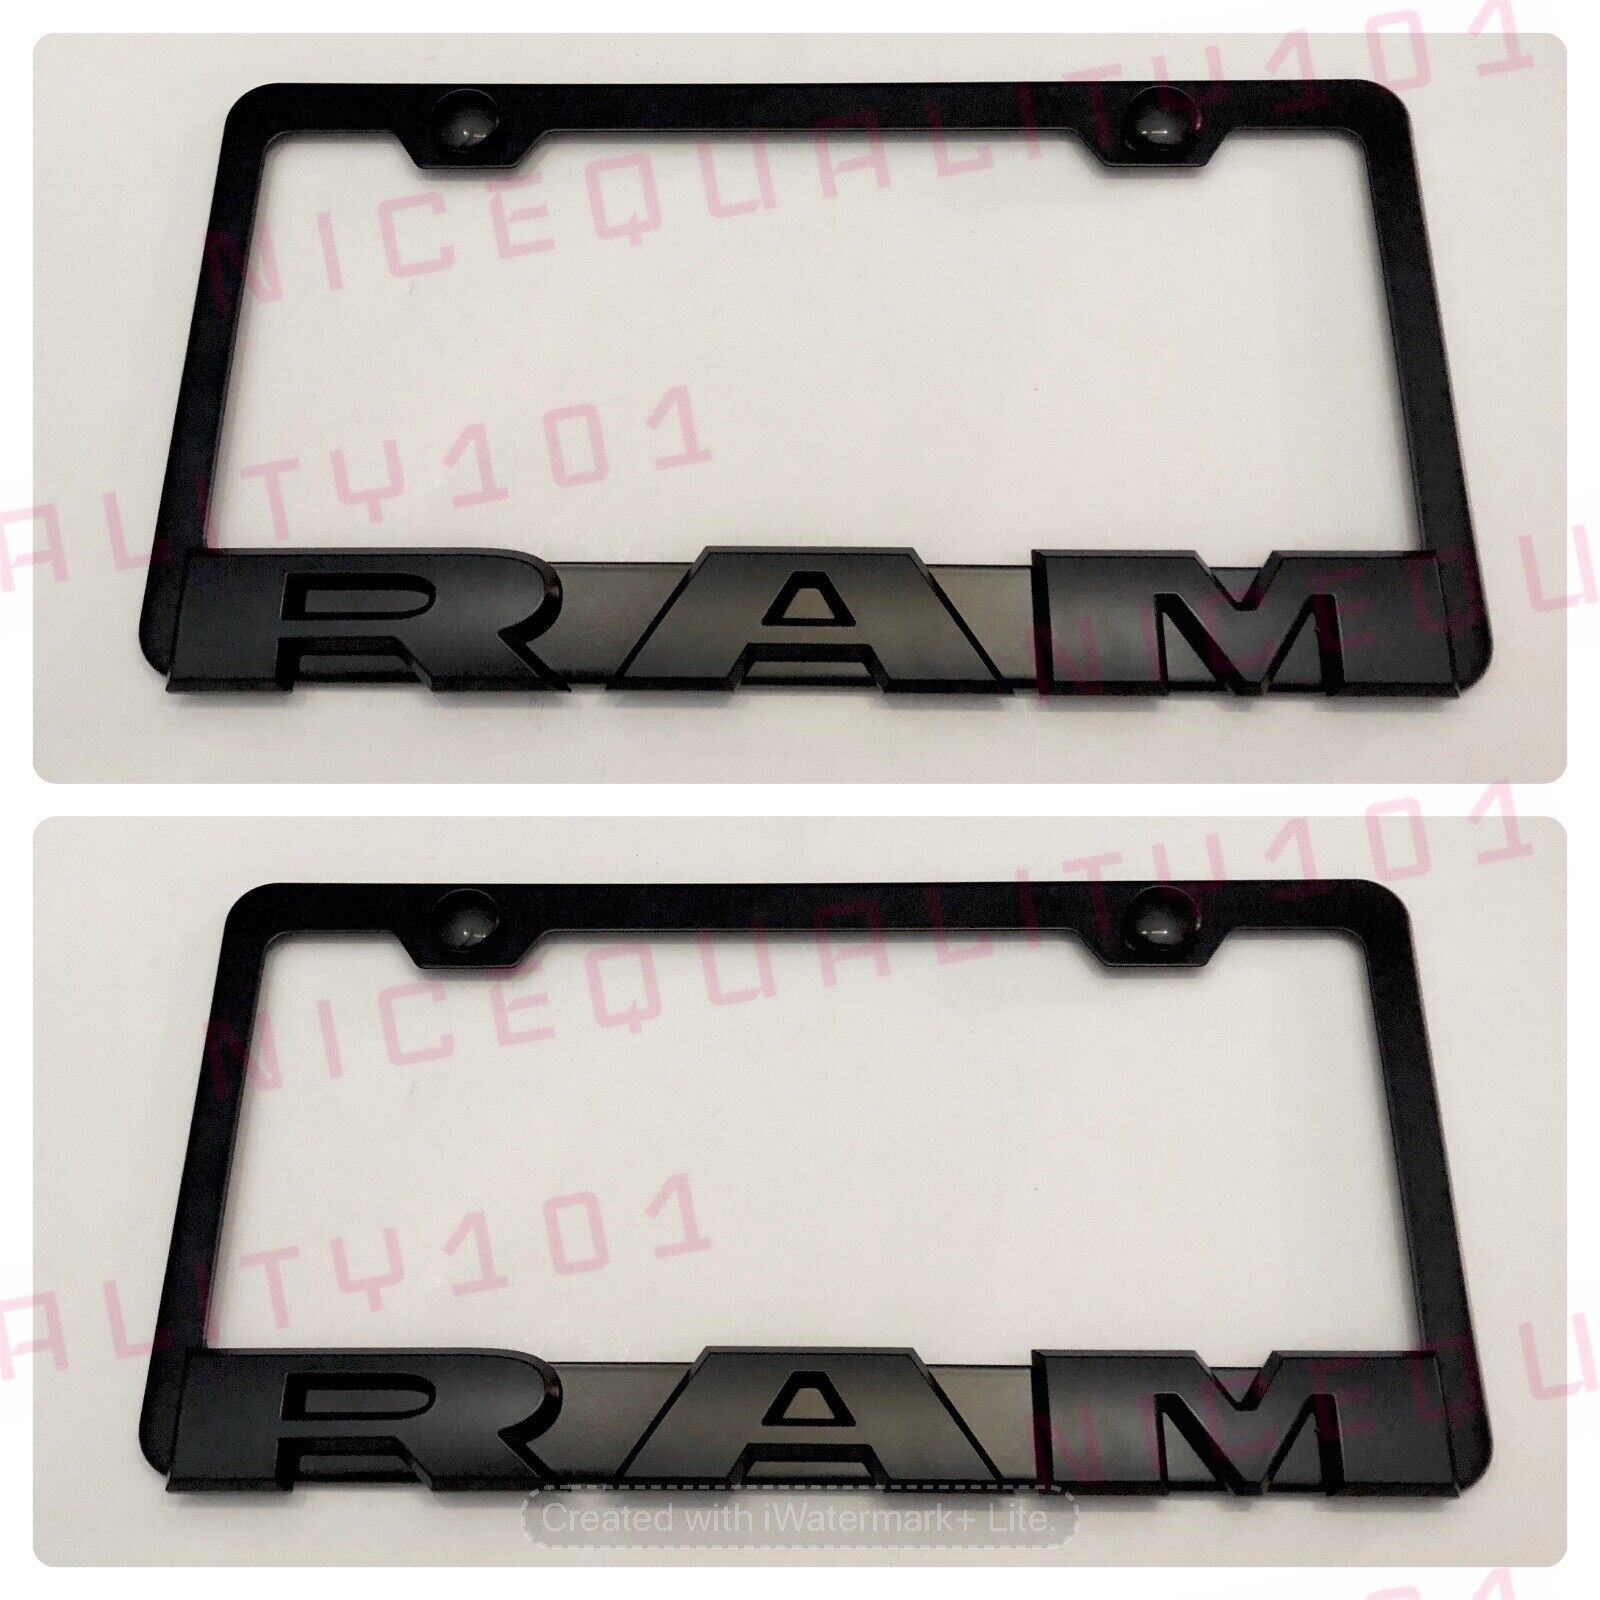 2X 3D RAM Letter Stainless Steel Black Finished License Plate Frame Holder